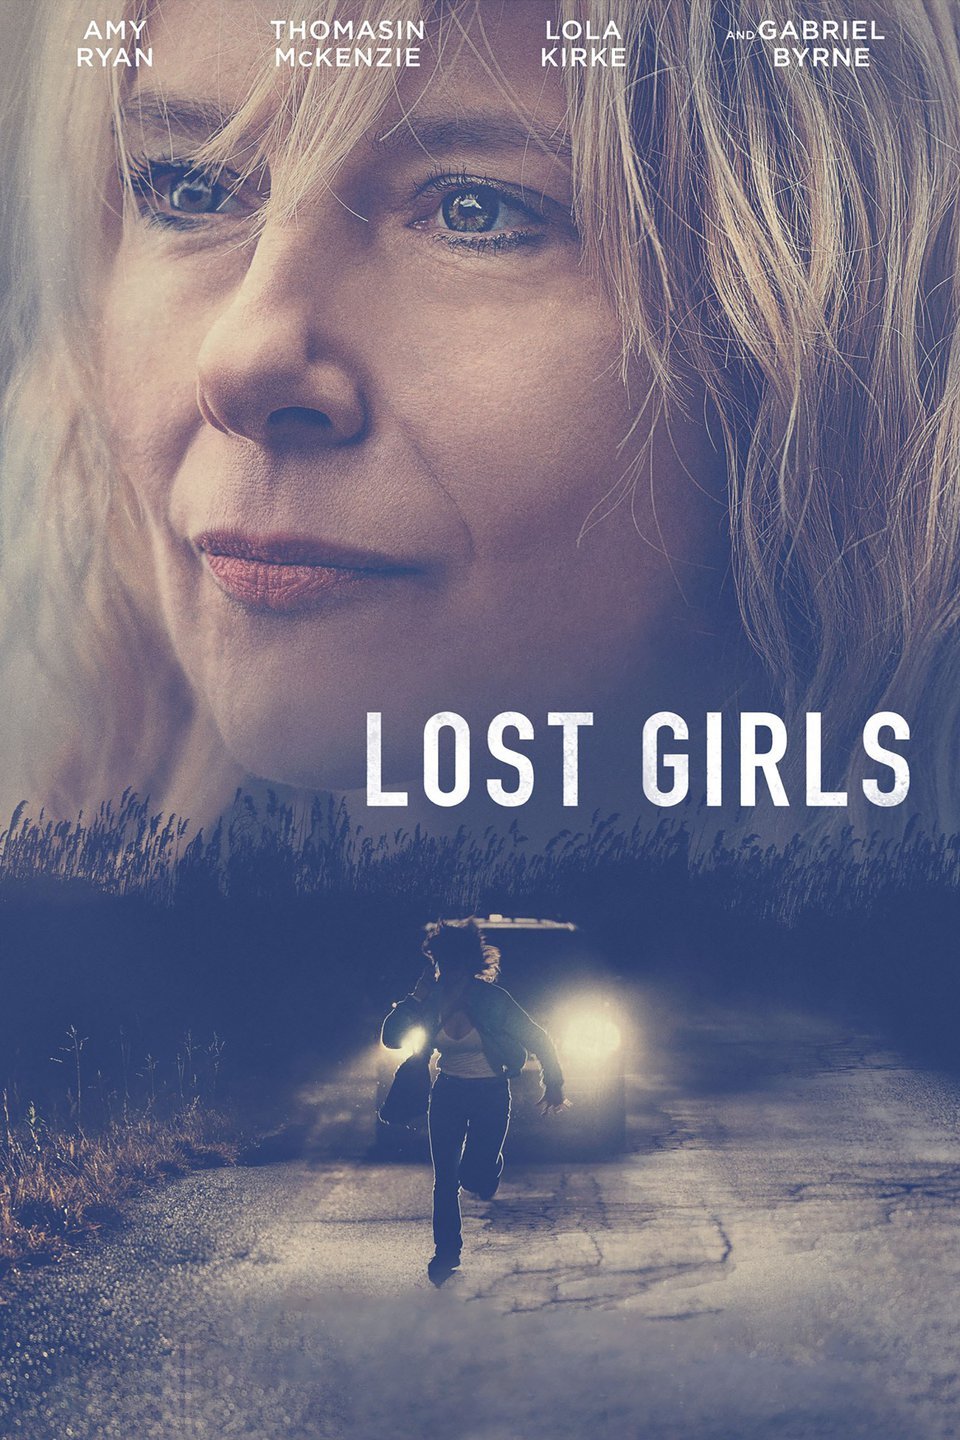 Lost Girls Cast, Actors, Producer, Director, Roles, Salary - Super